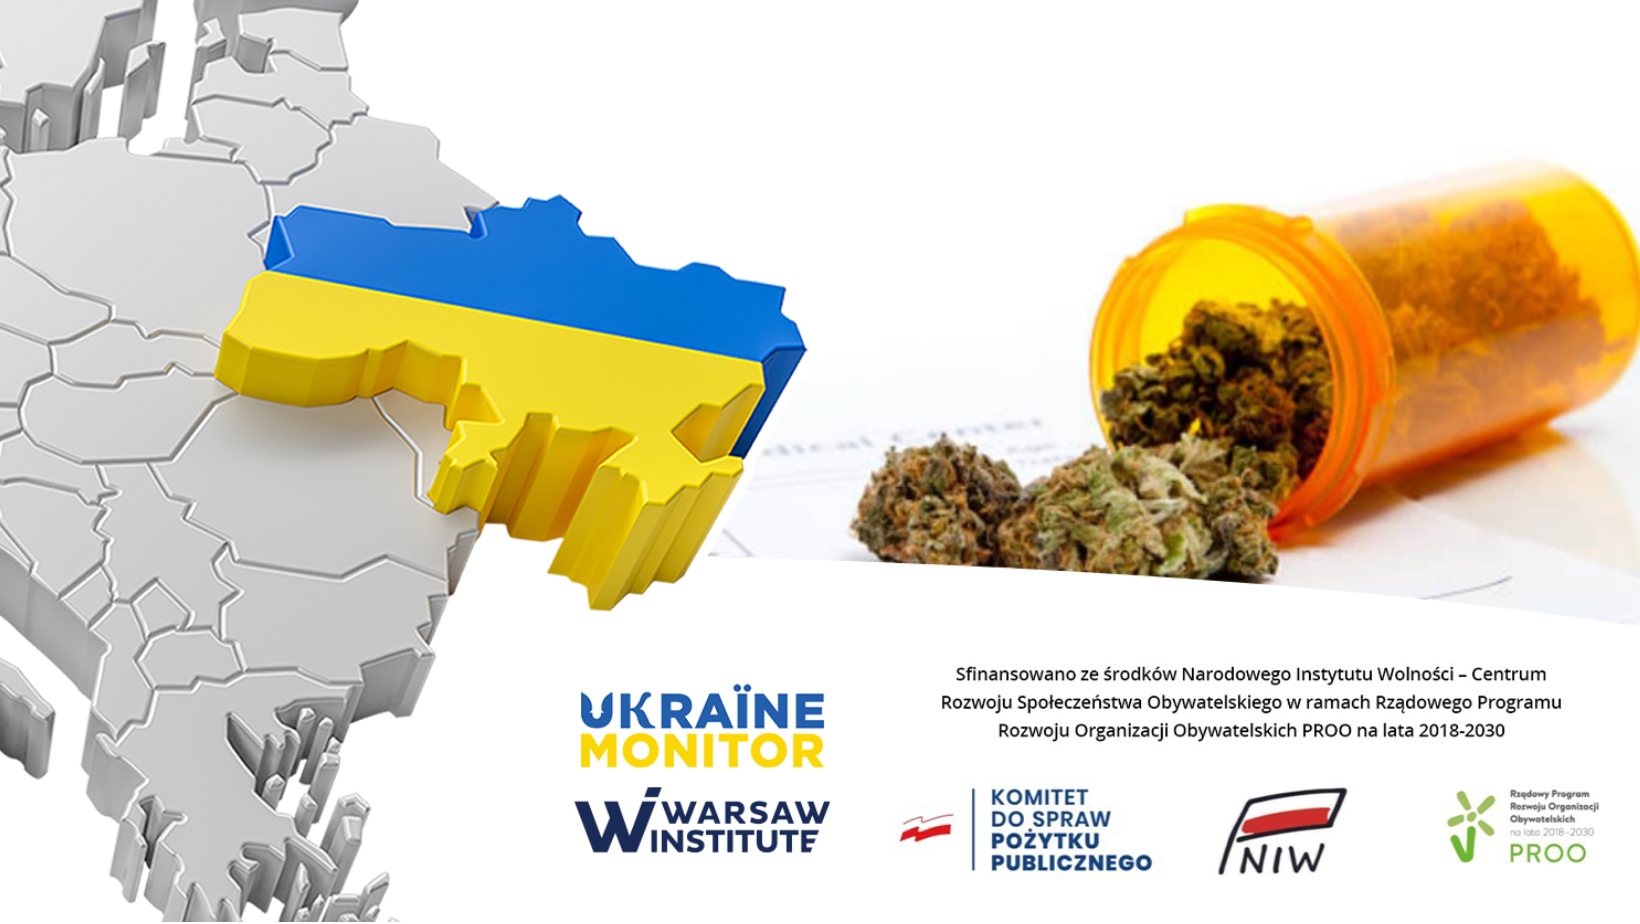 Ukraine Legalizes Medical Marijuana to Address Mental Health Crisis